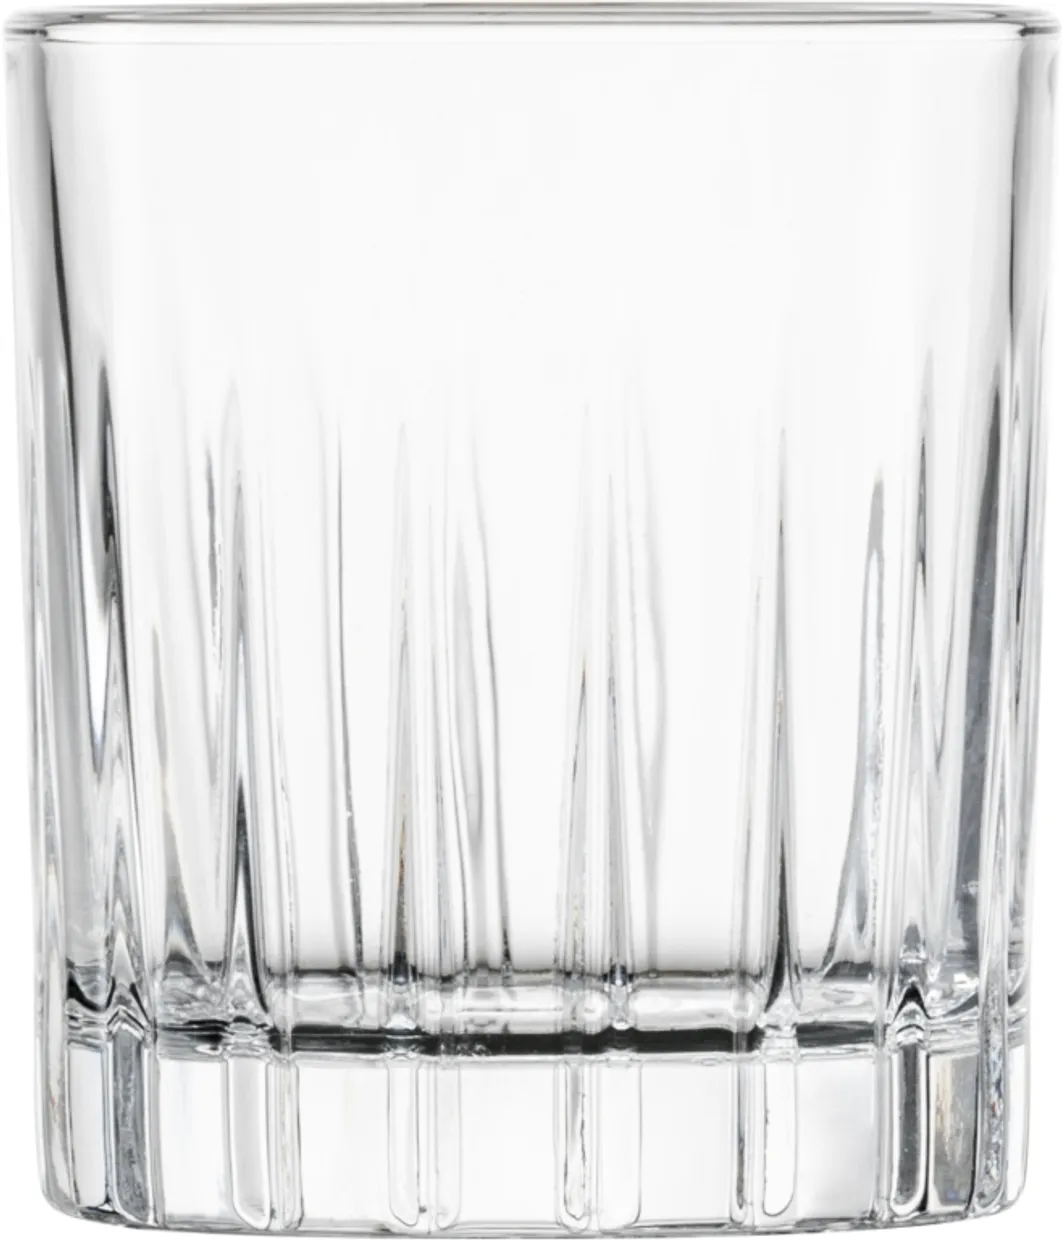 Stage Shotglas 35 - 0.078Ltr - 4 glazen